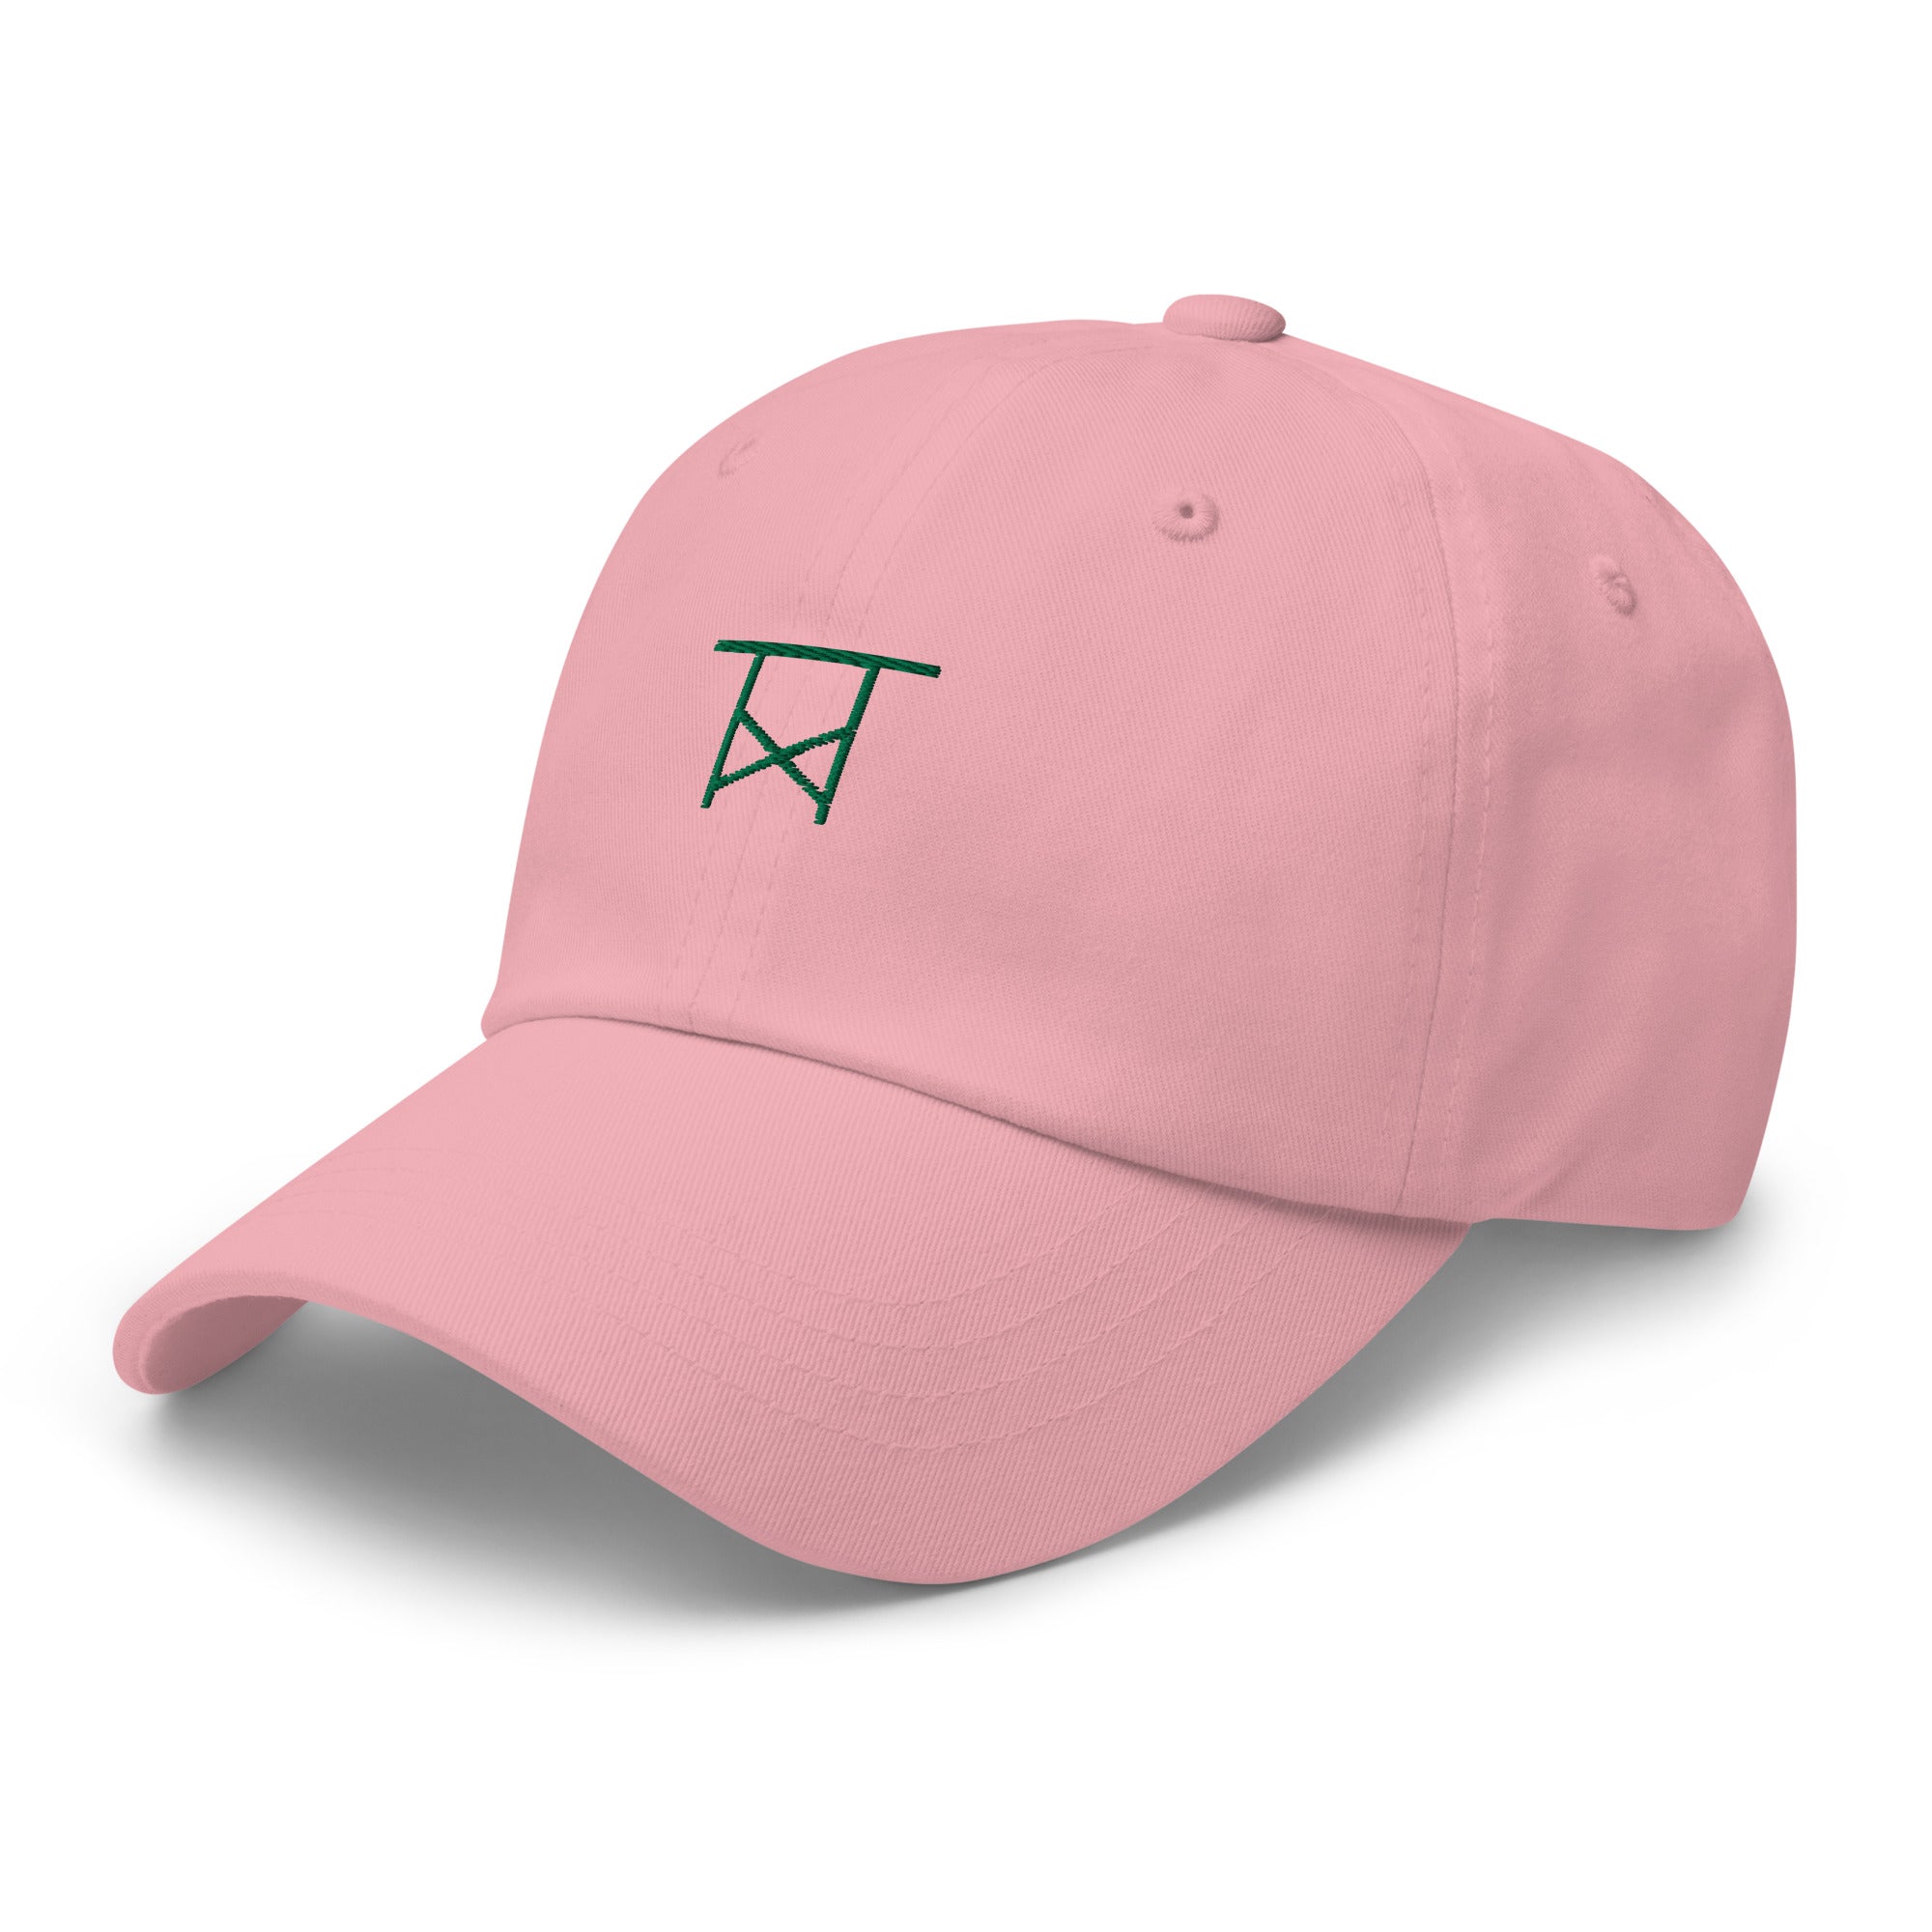 Ranch Brand Twill Cap